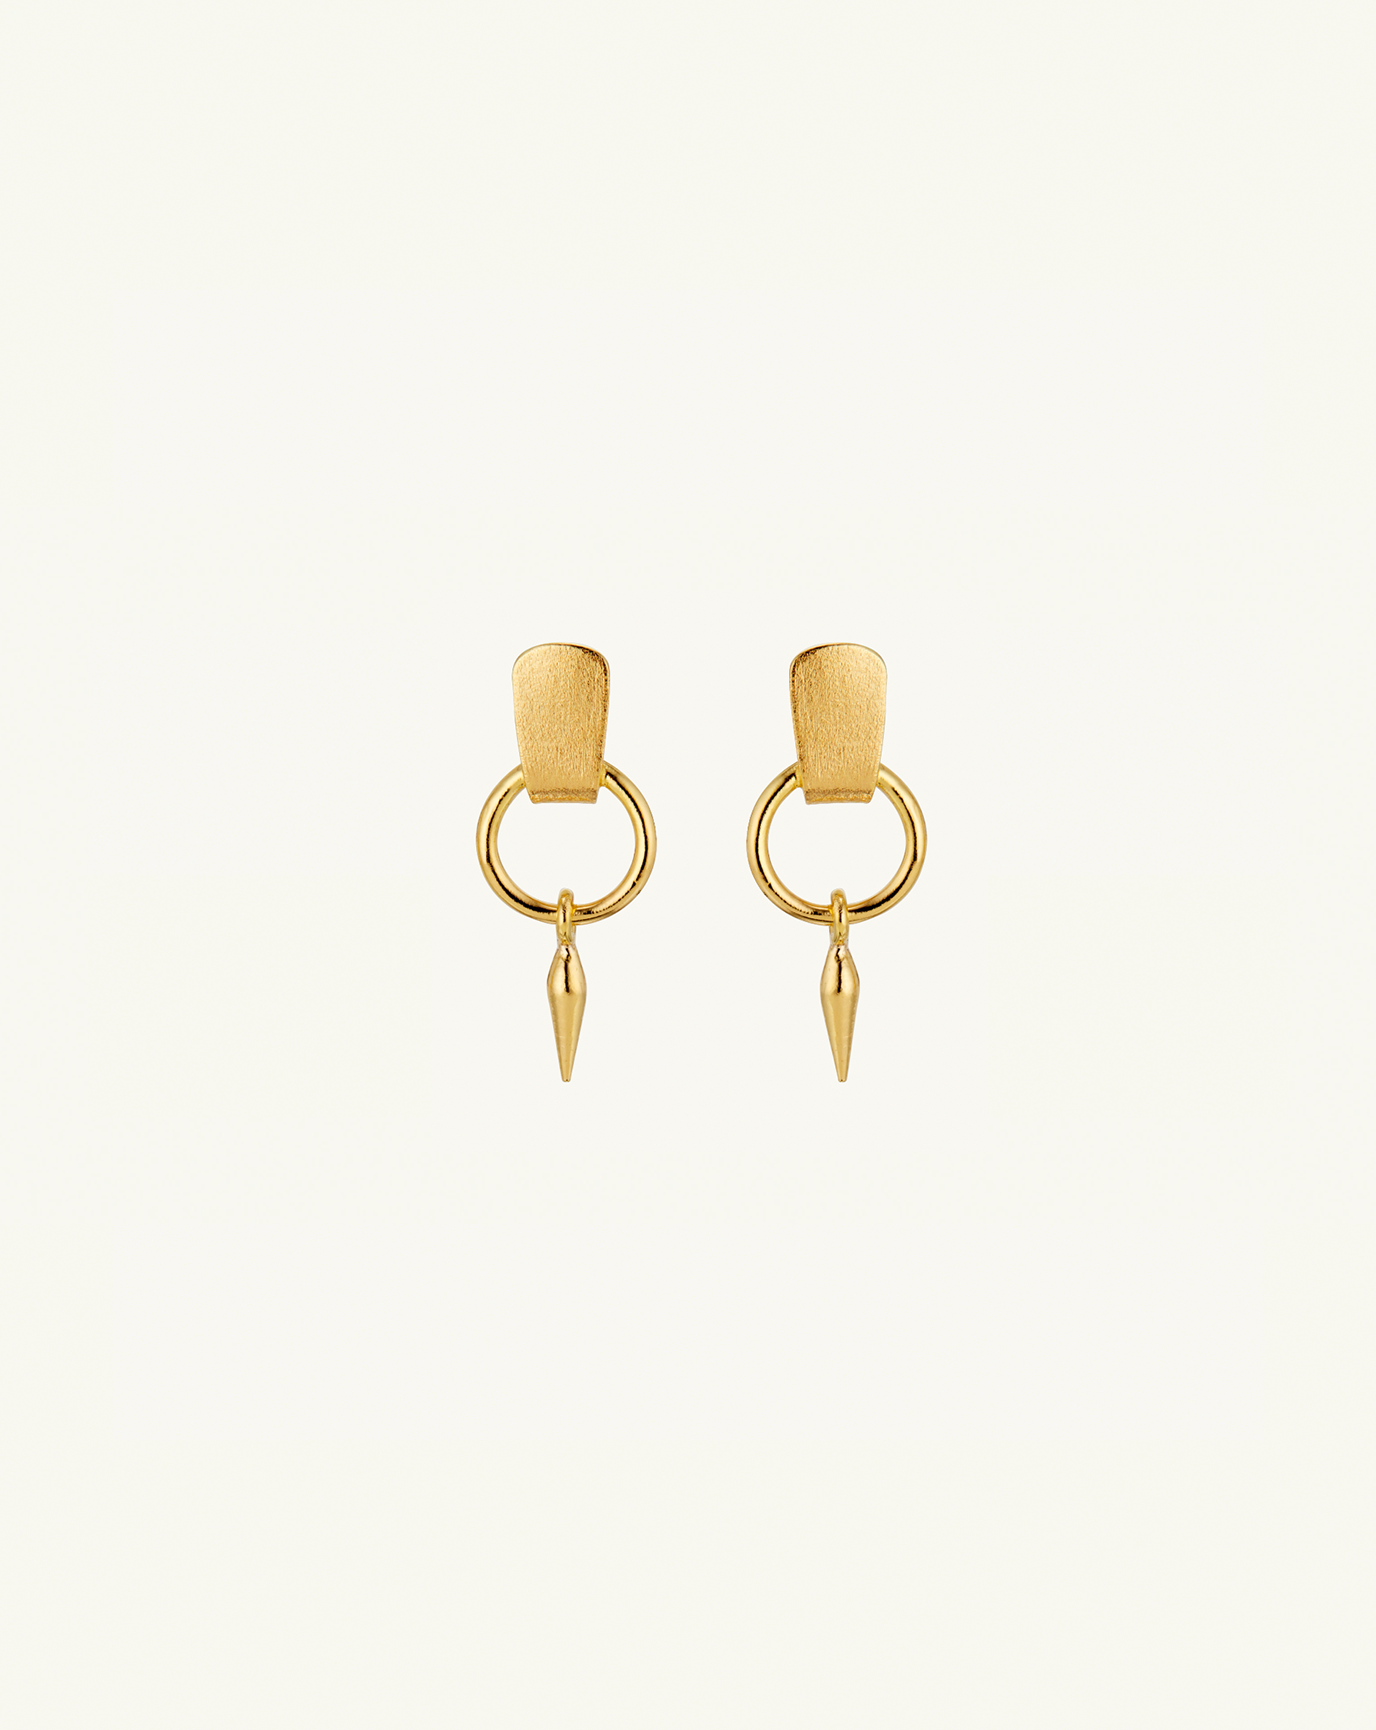 Product image of the Geometric Pod Drop earrings